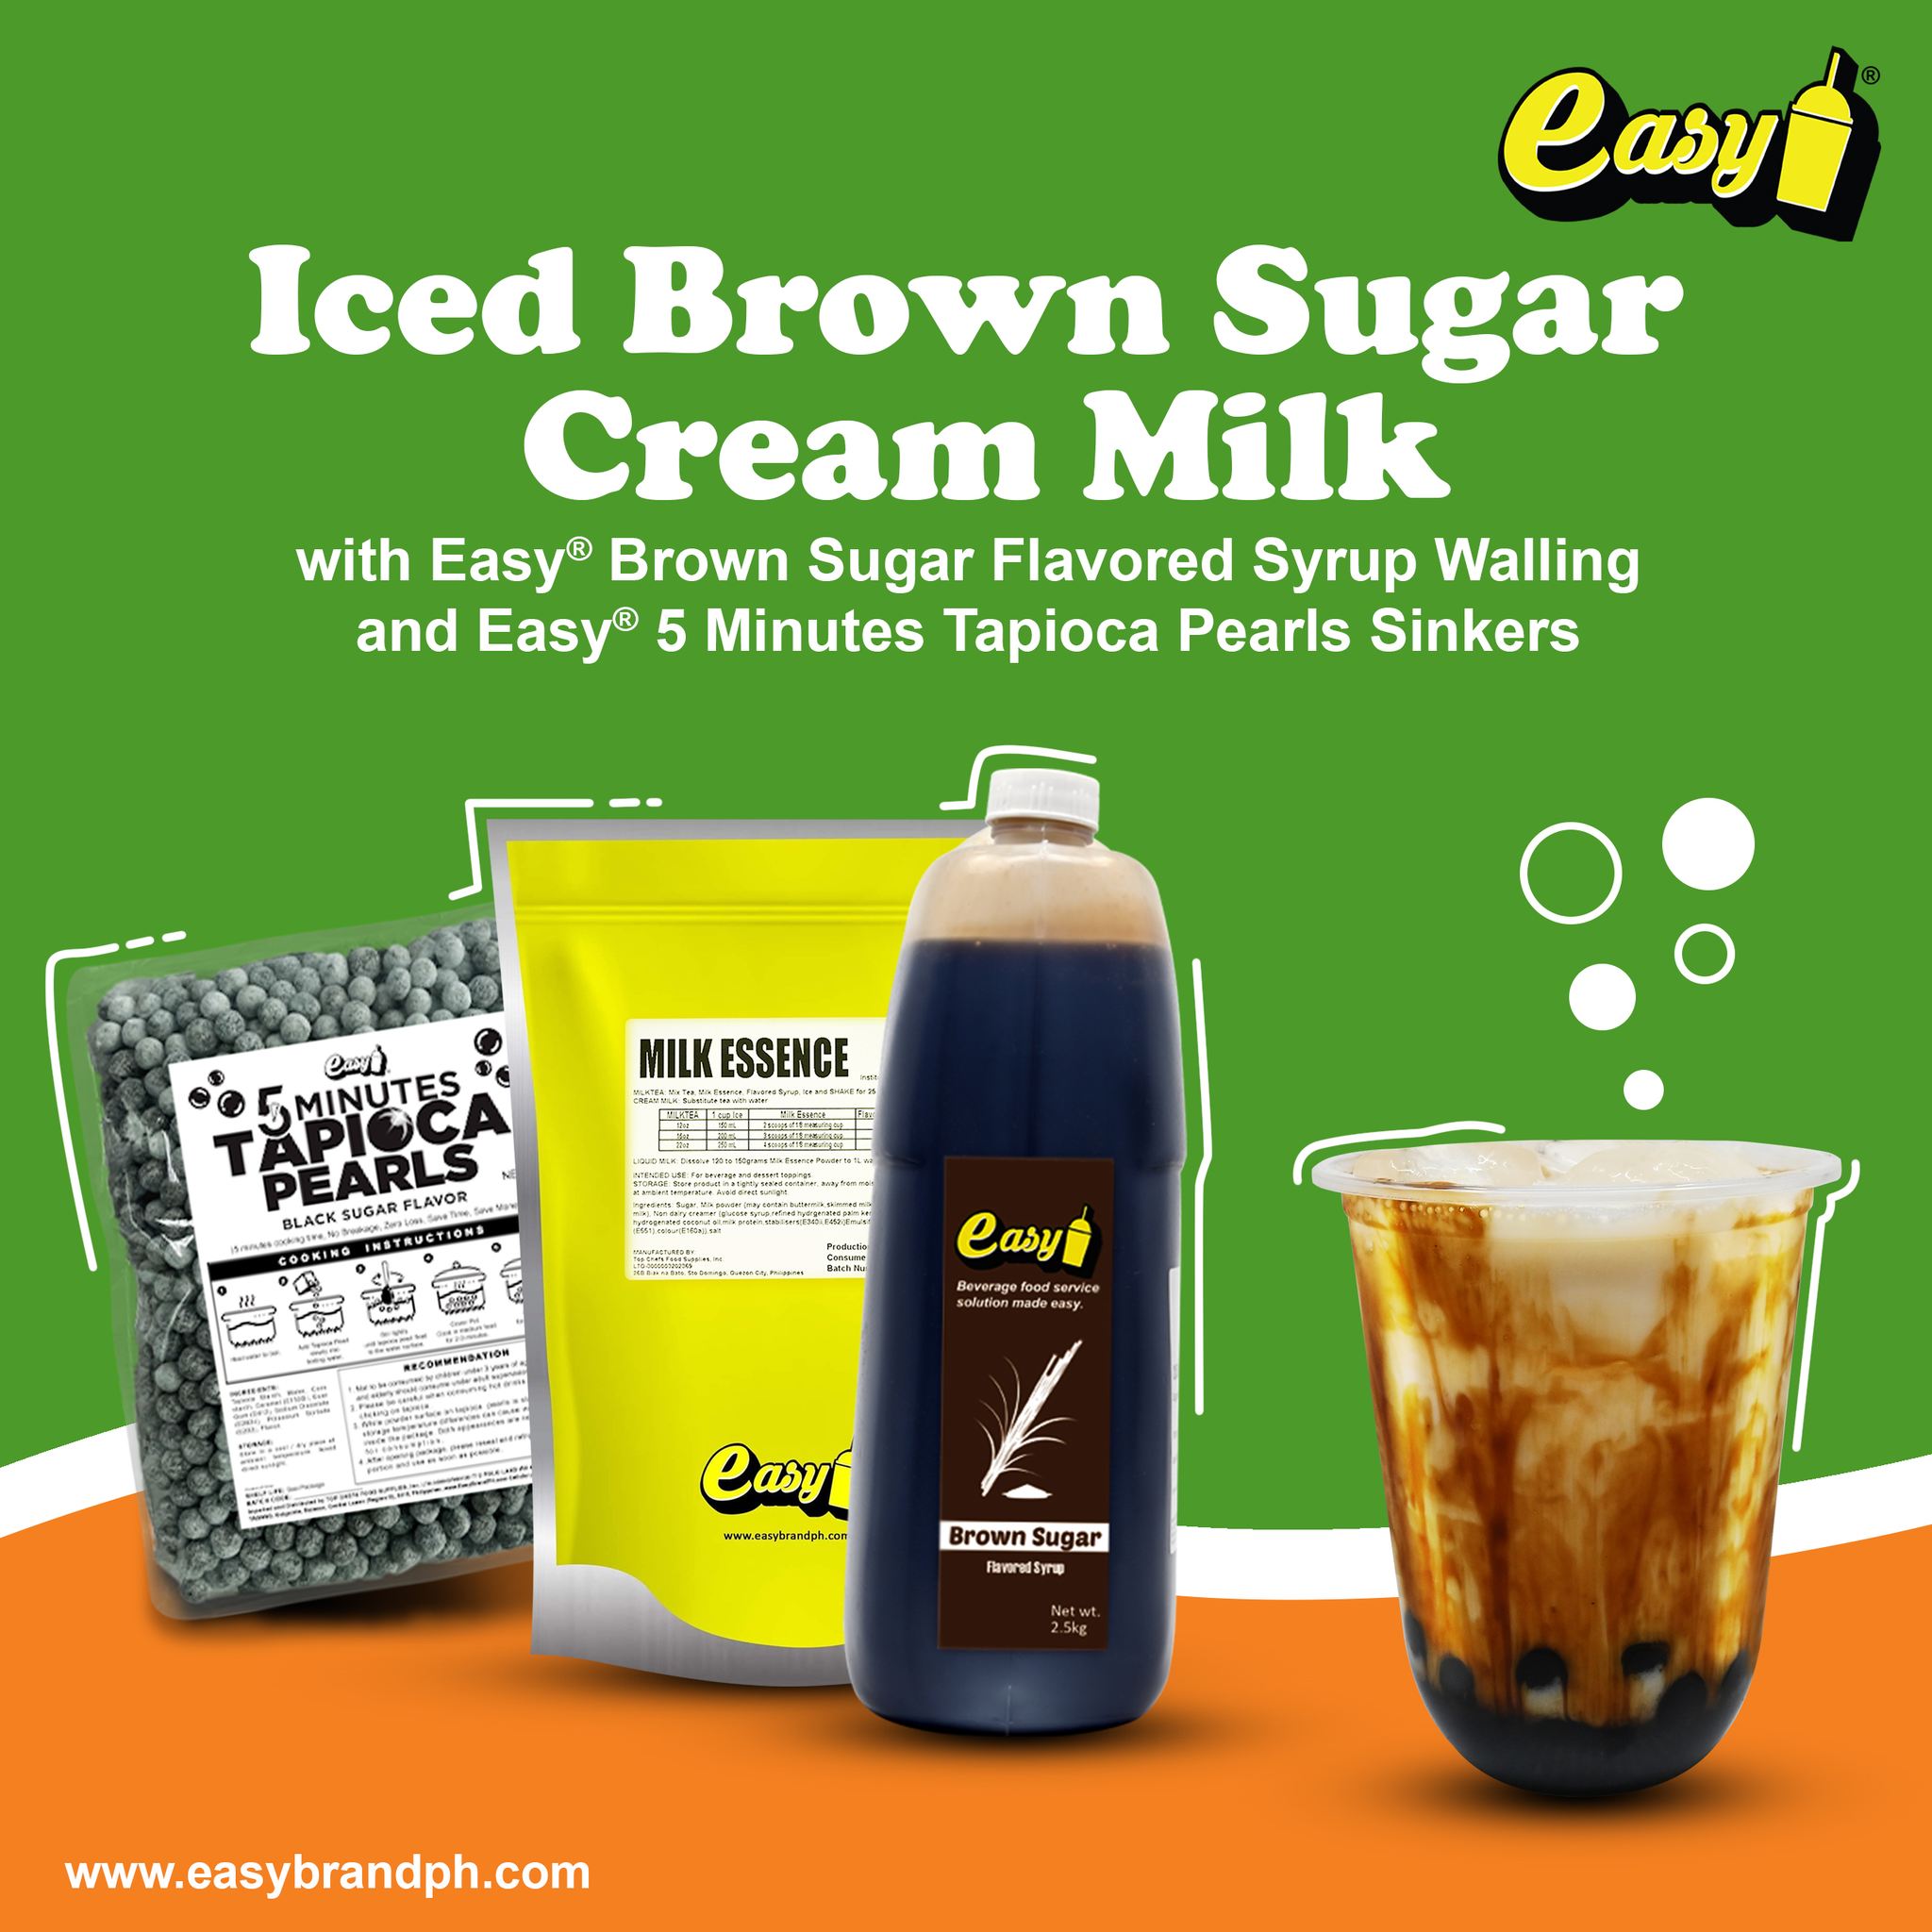 Iced Brown Sugar Cream Milk